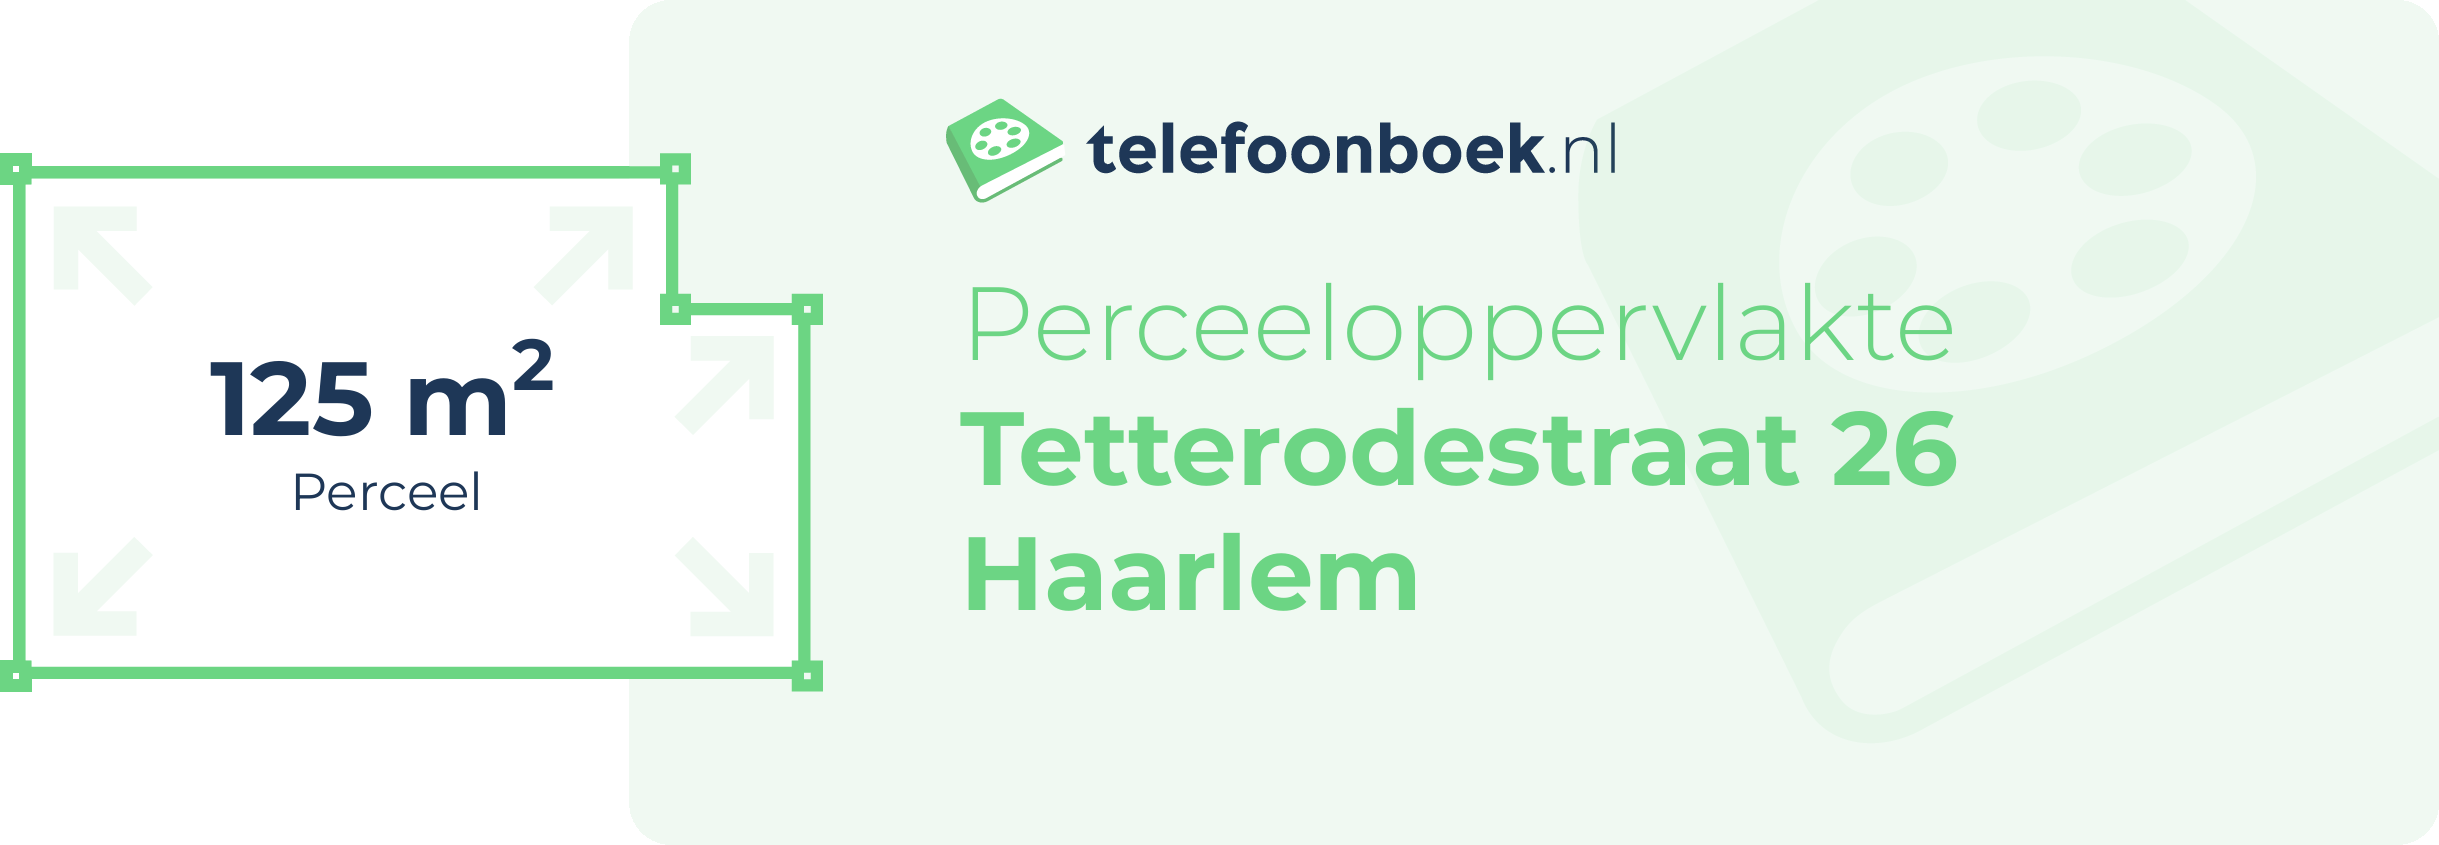 Perceeloppervlakte Tetterodestraat 26 Haarlem